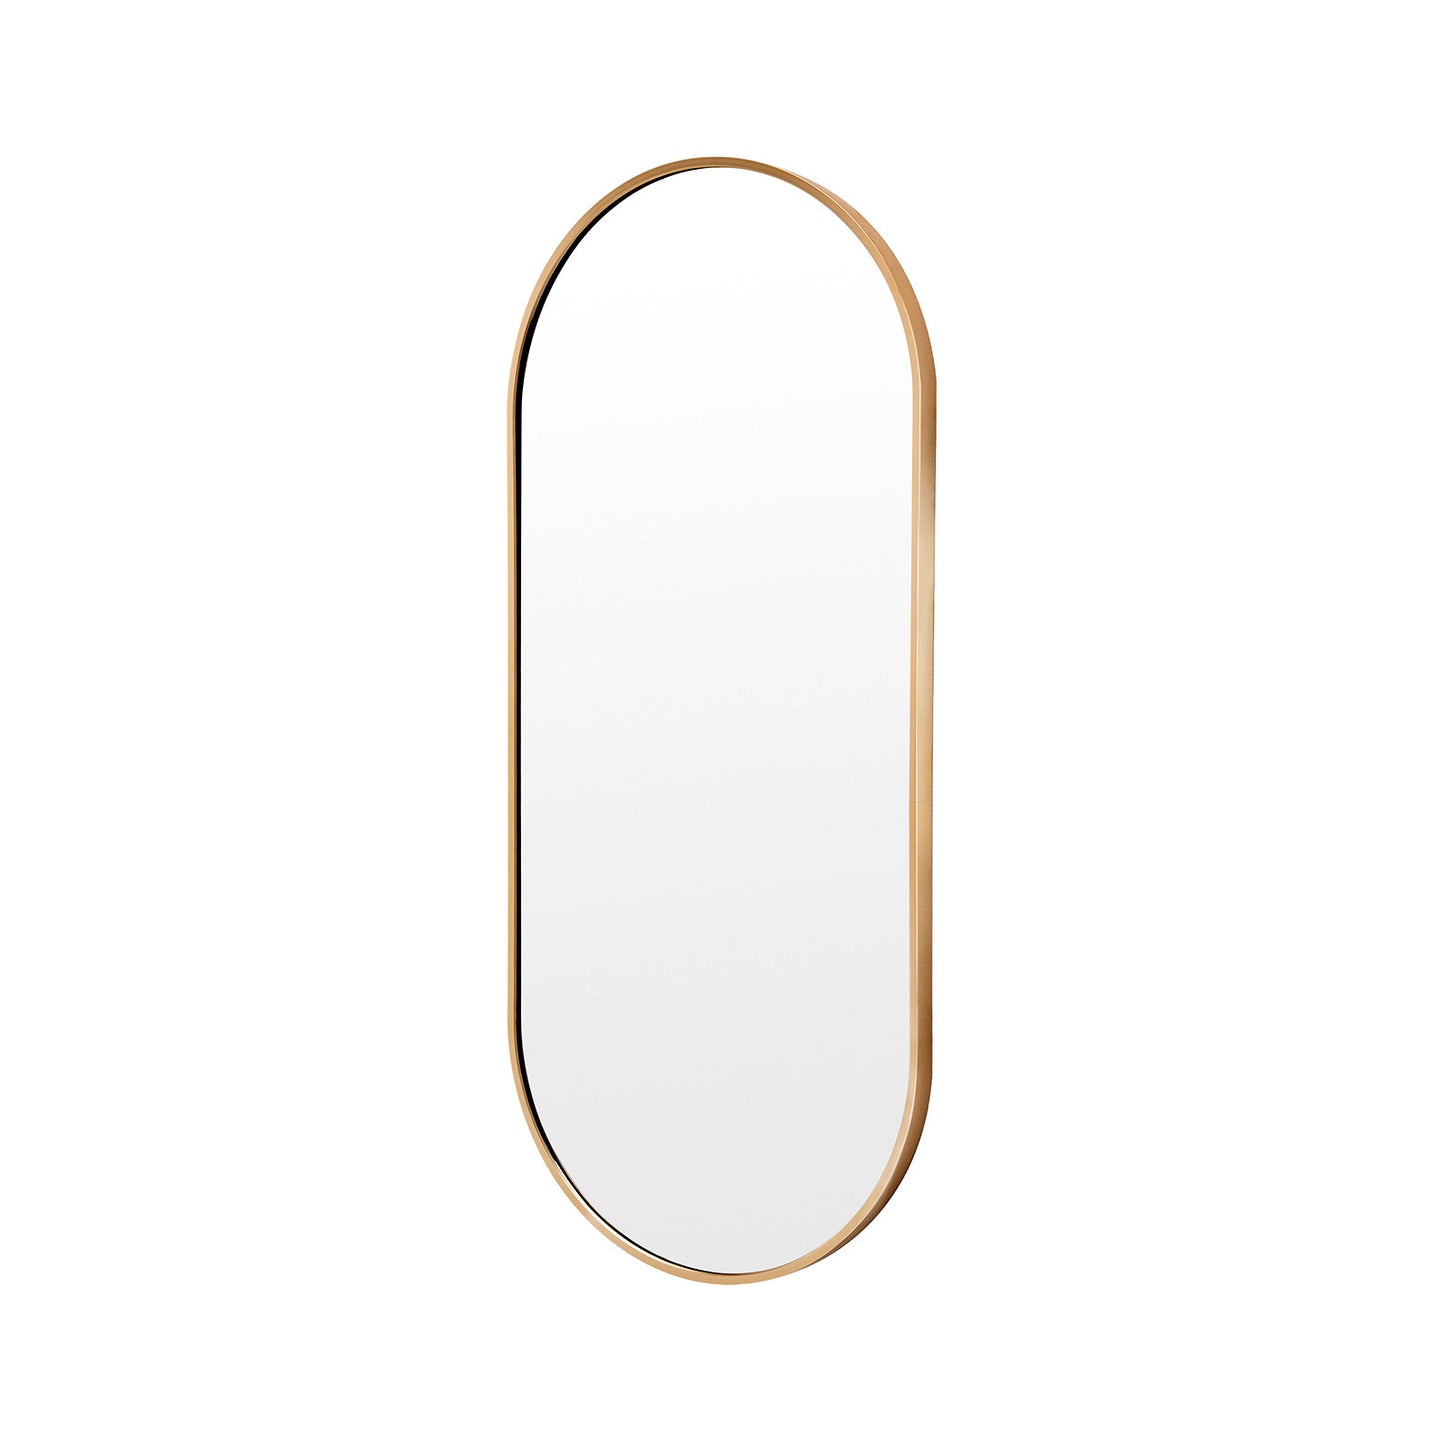 Gold Wall Mirror Oval Aluminum Frame Makeup Decor Bathroom Vanity 45 x 100cm - image1